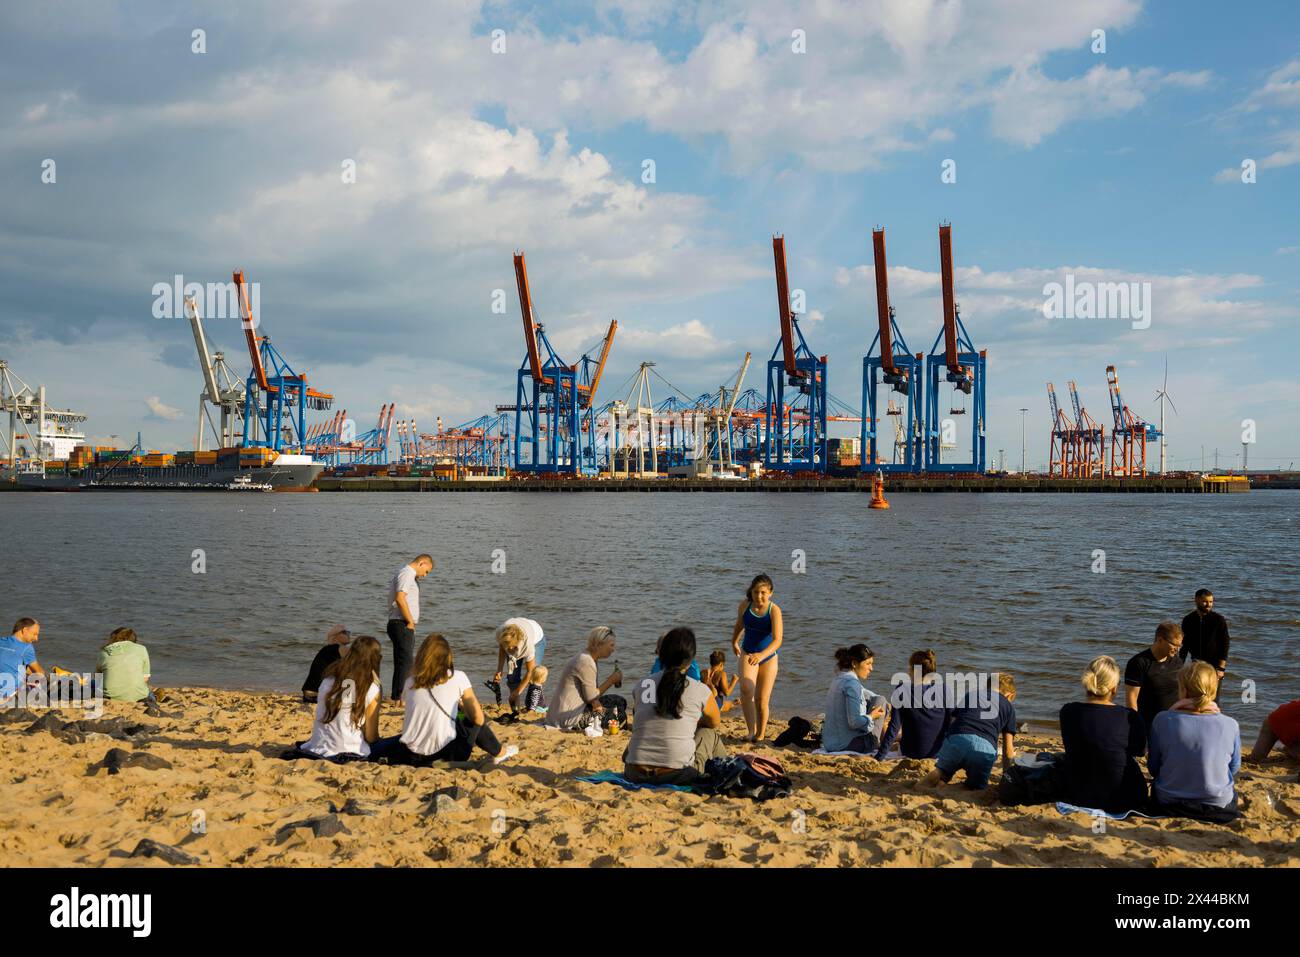 People on the beach, Strandbar Strandperle, Elbe beach, Hamburg harbour in the background, Oevelgoenne, Hamburg, Germany Stock Photo